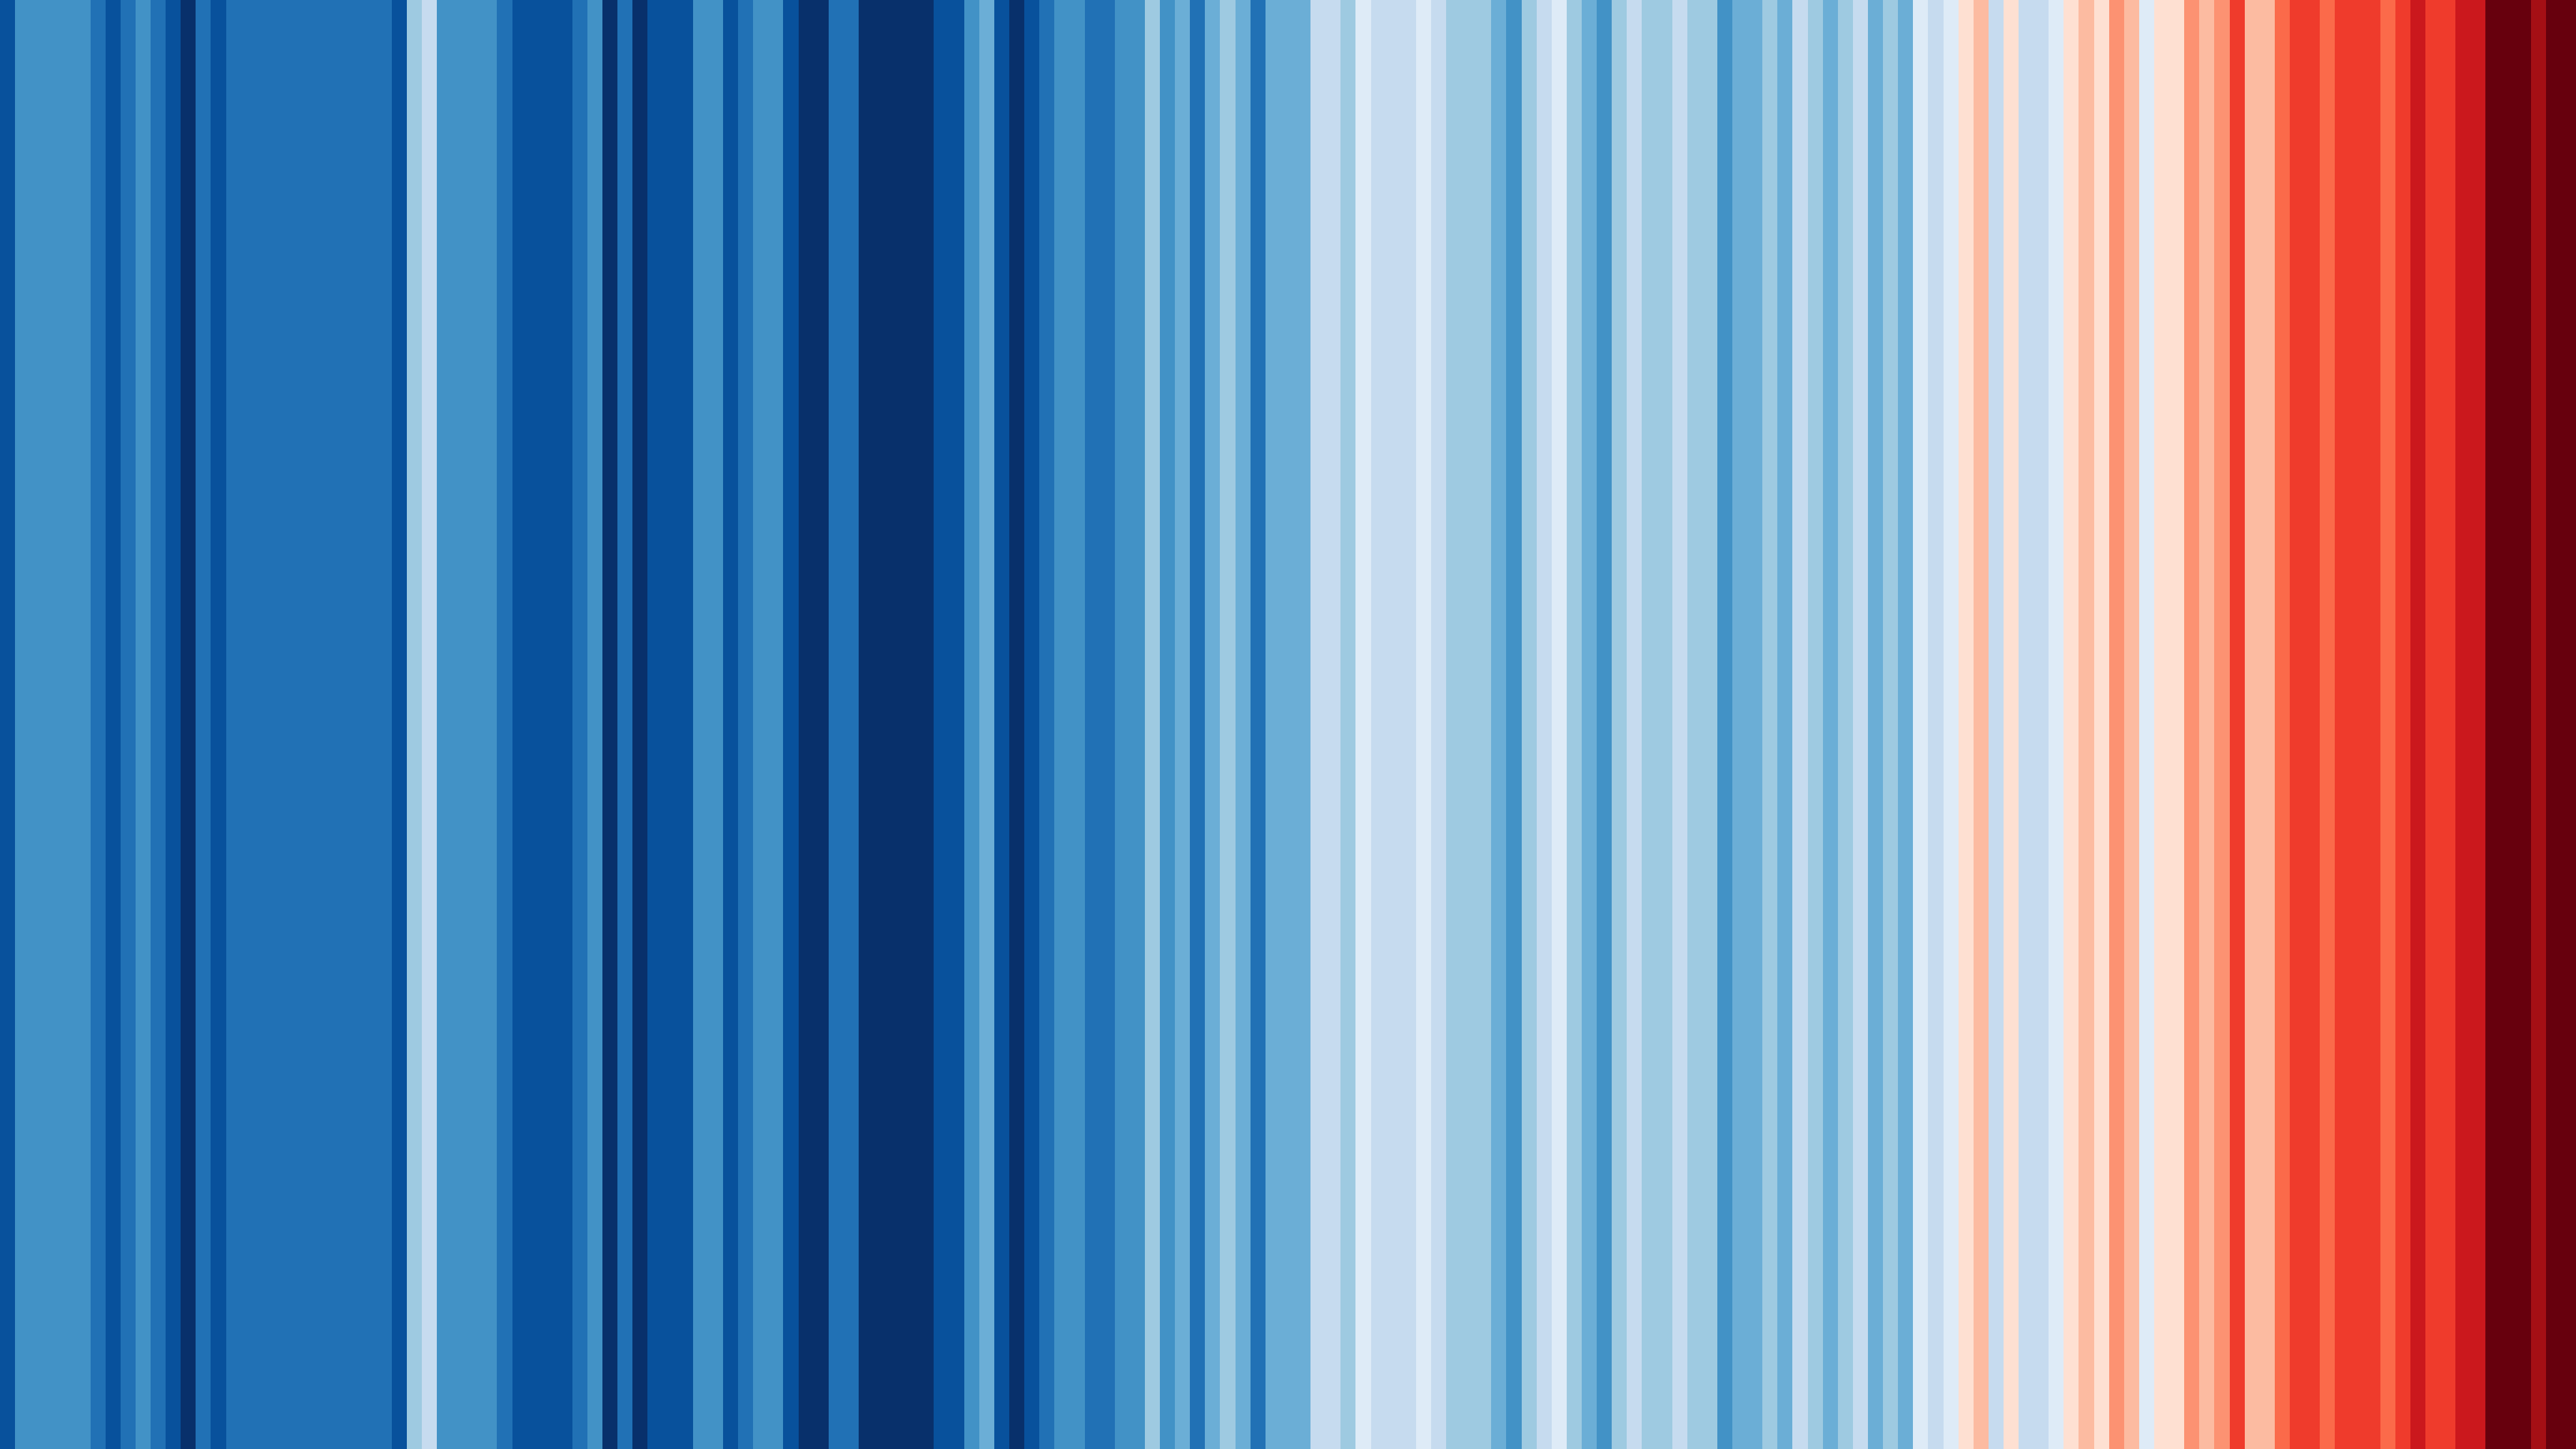 Climate change warming stripes